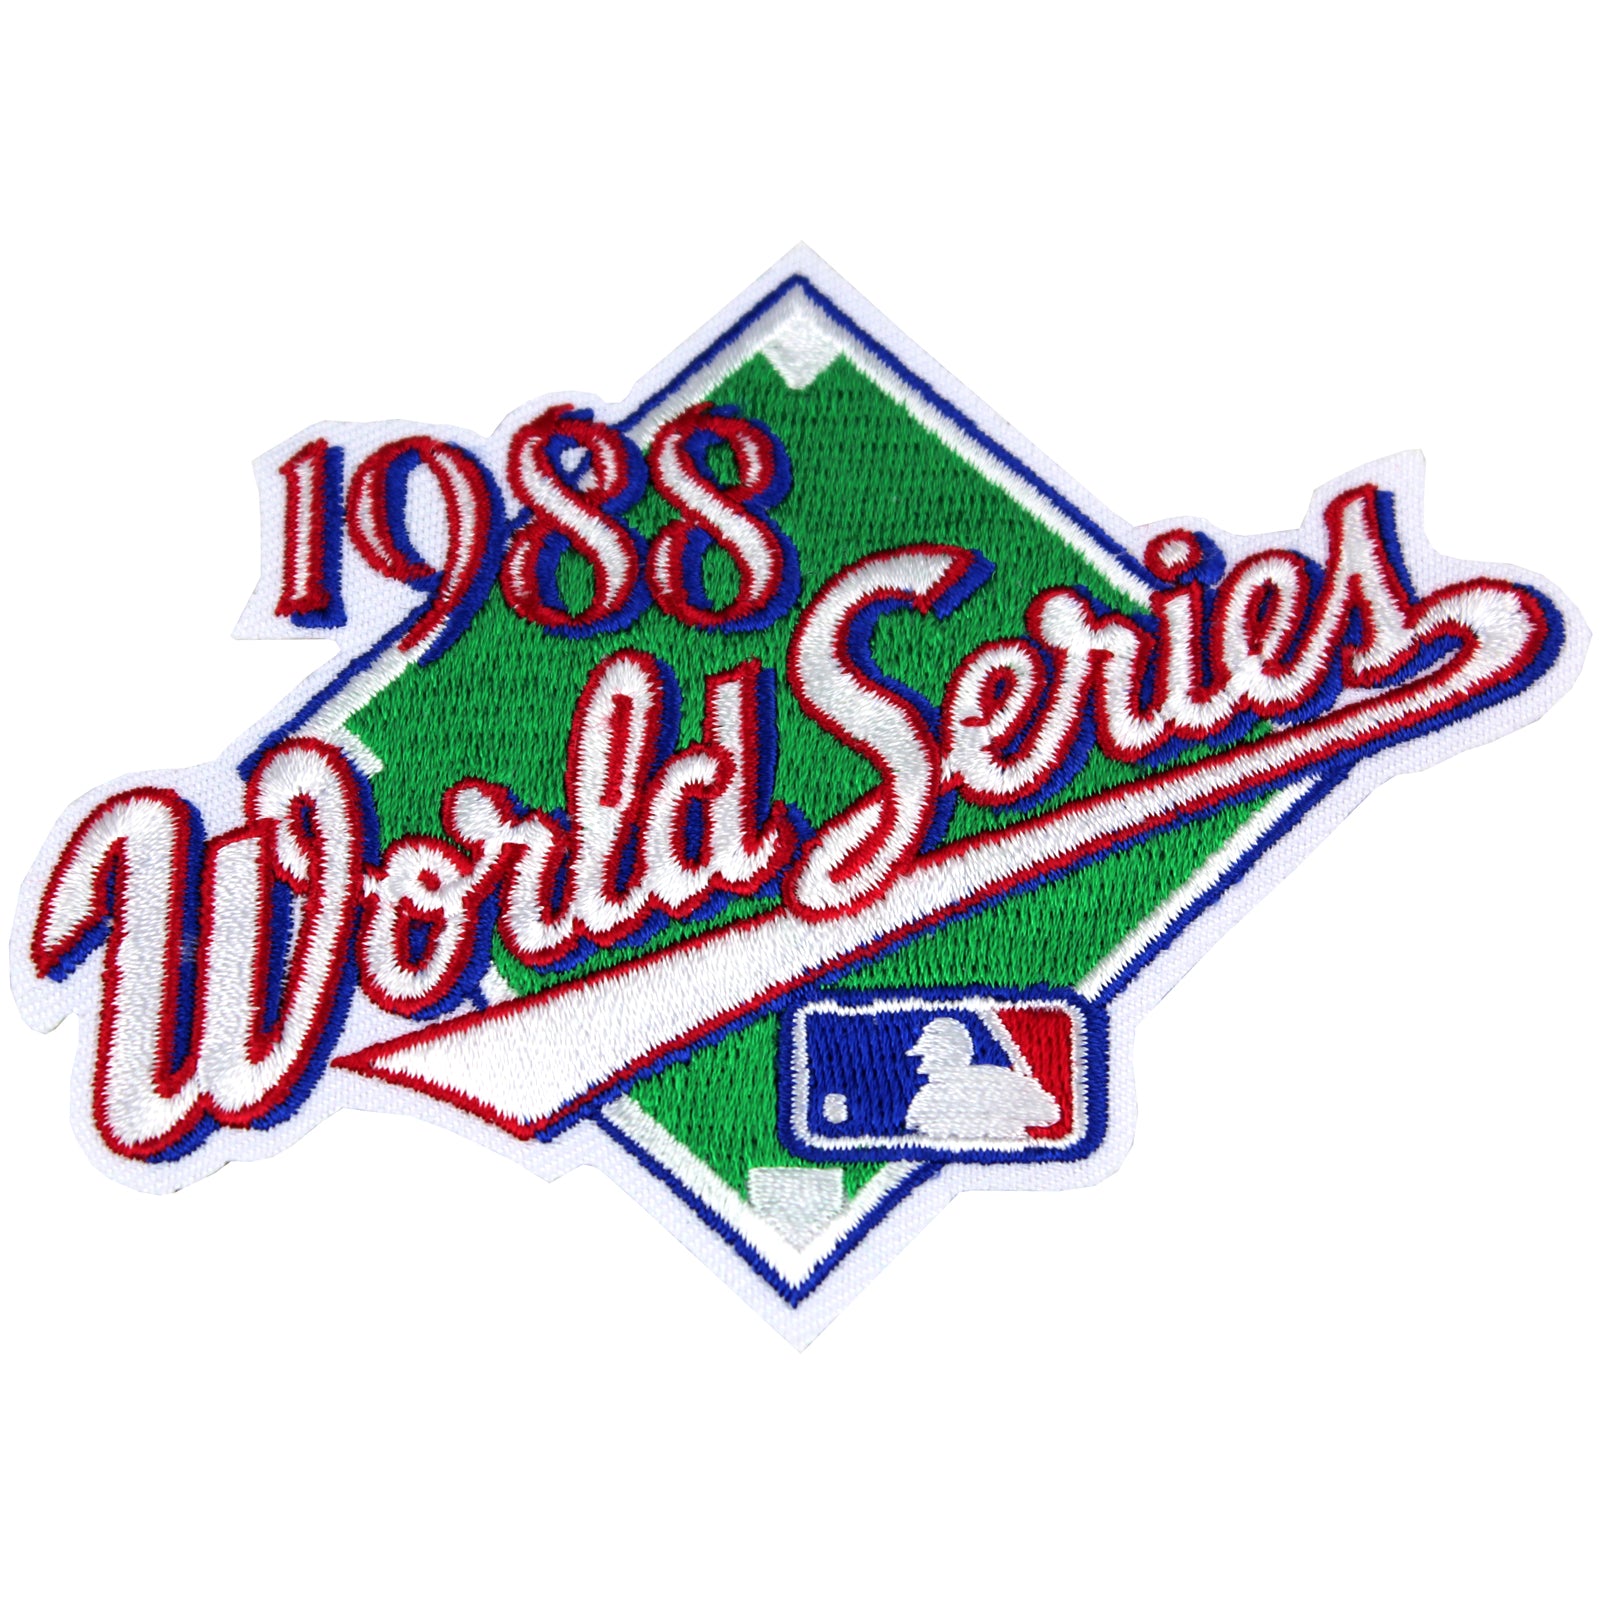 Los Angeles Dodgers 35th anniversary 1988 2023 World Series